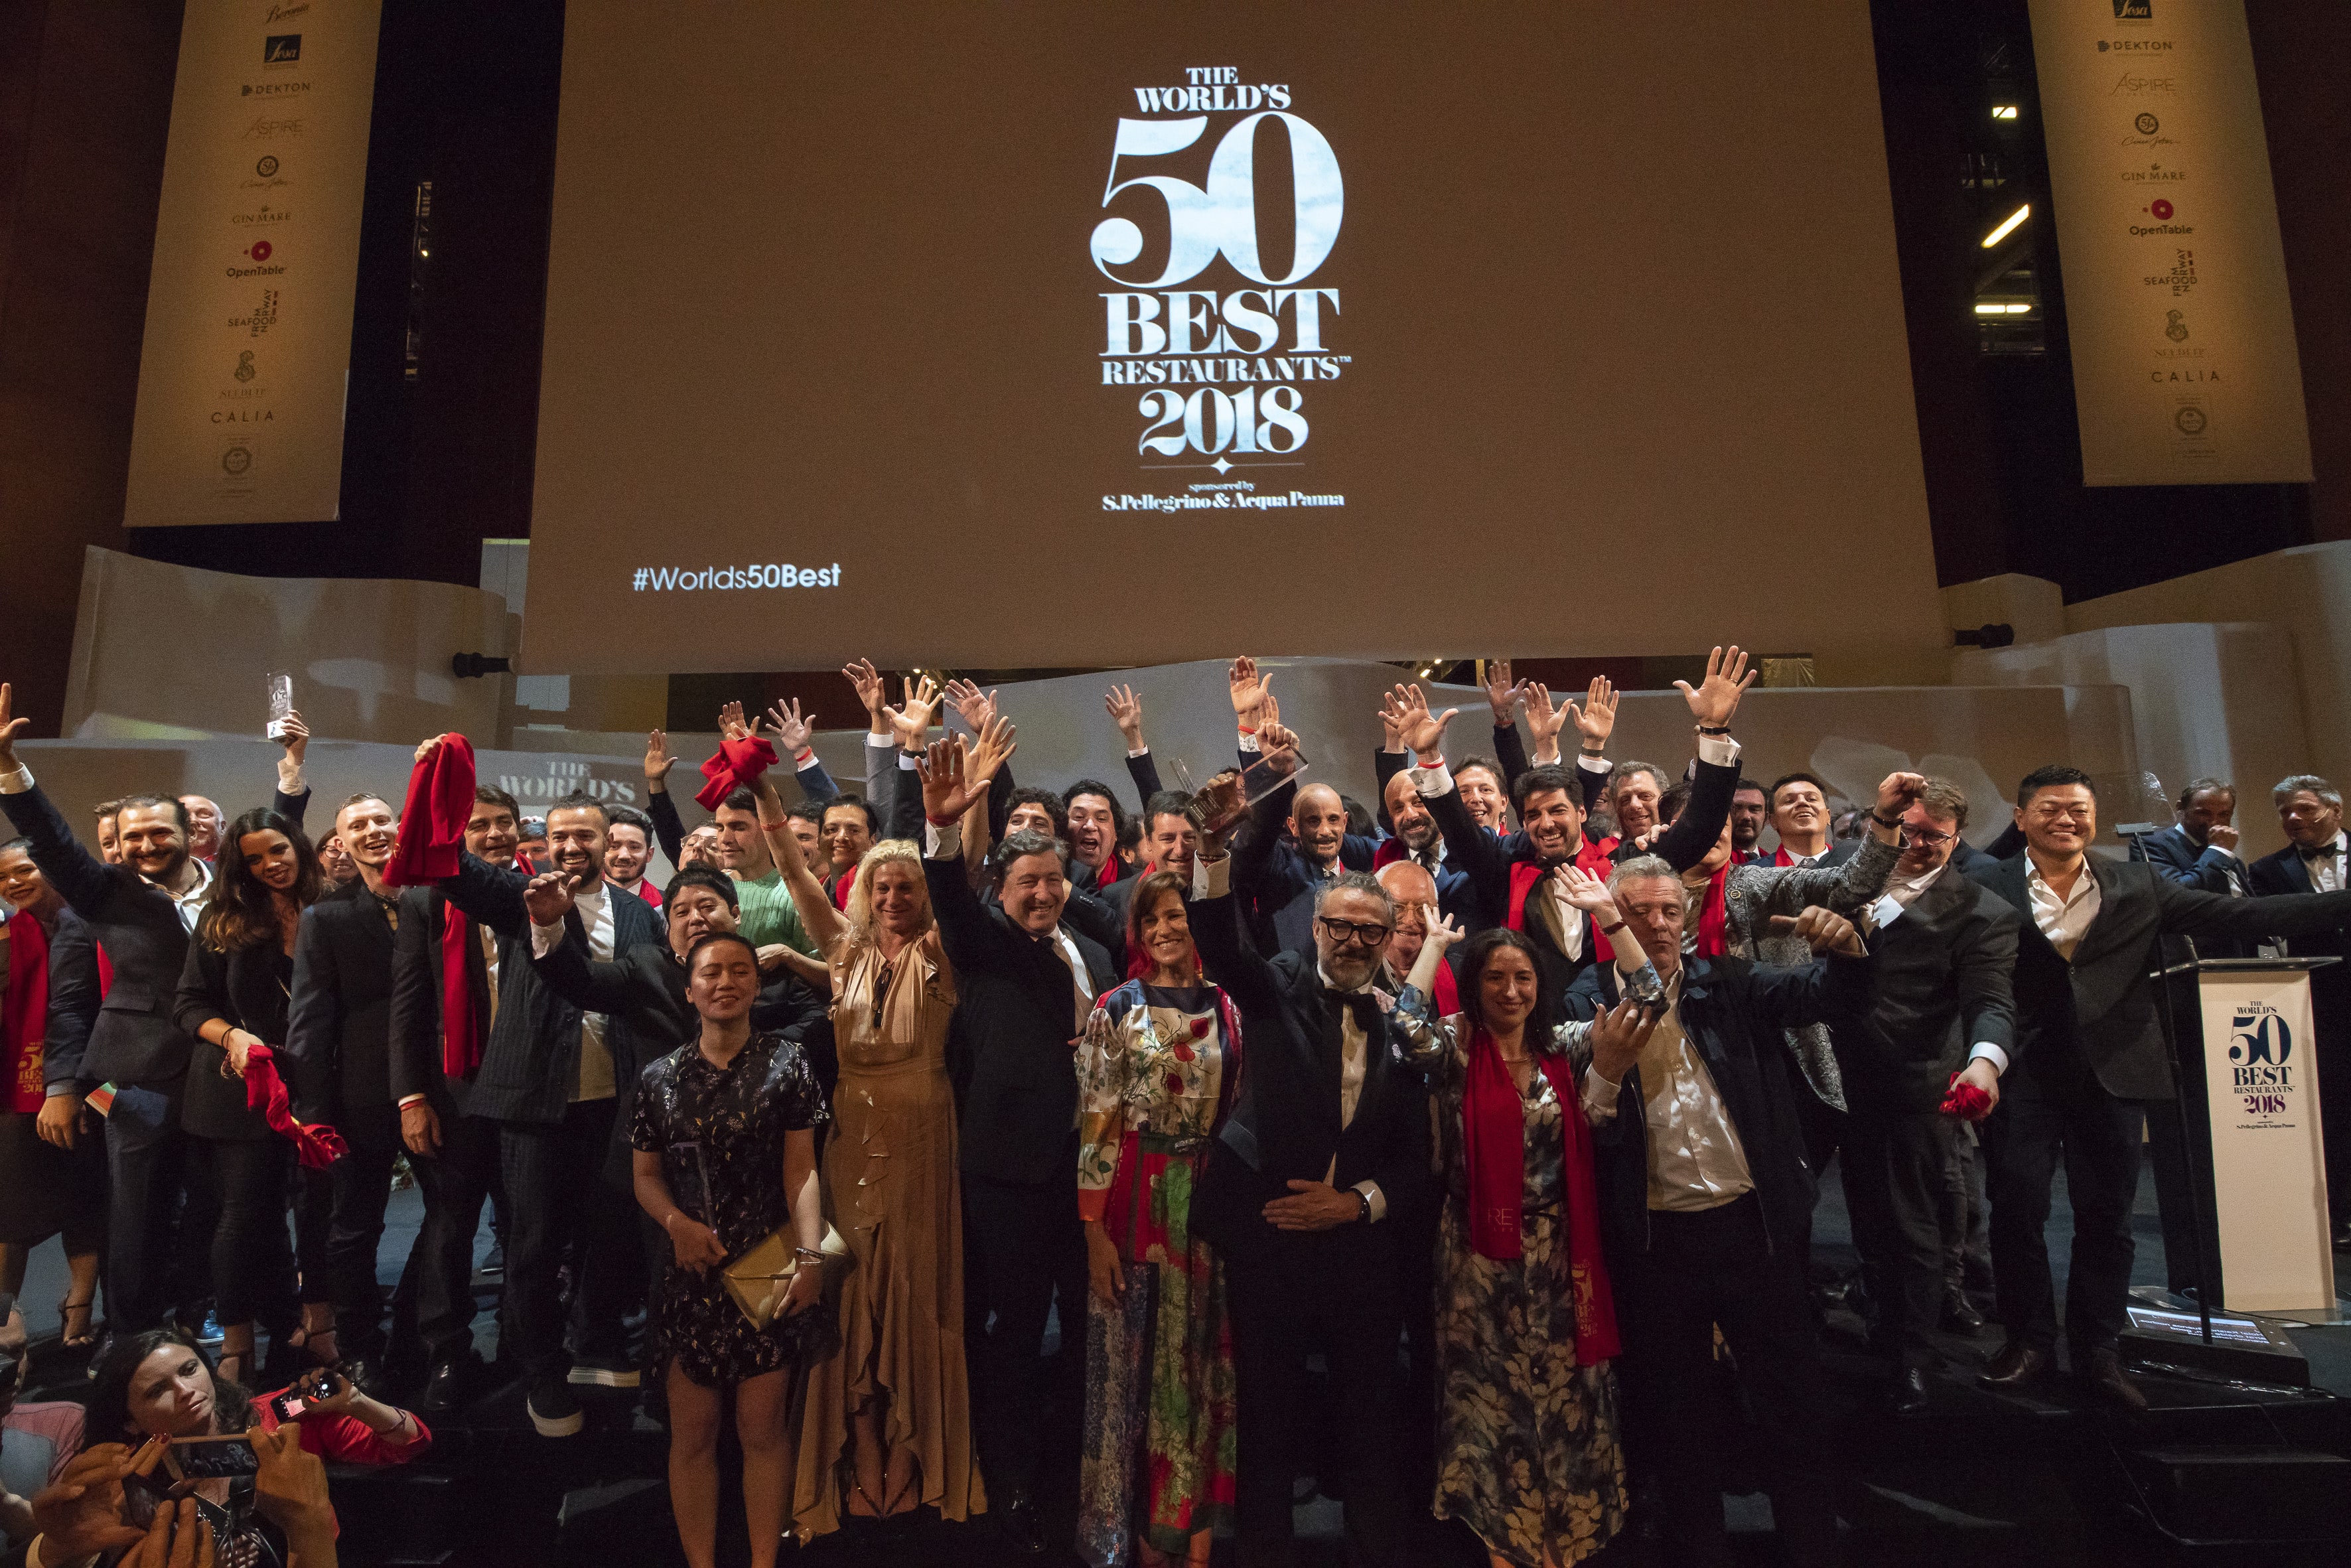 World’s 50 Best Restaurants_Group Photo